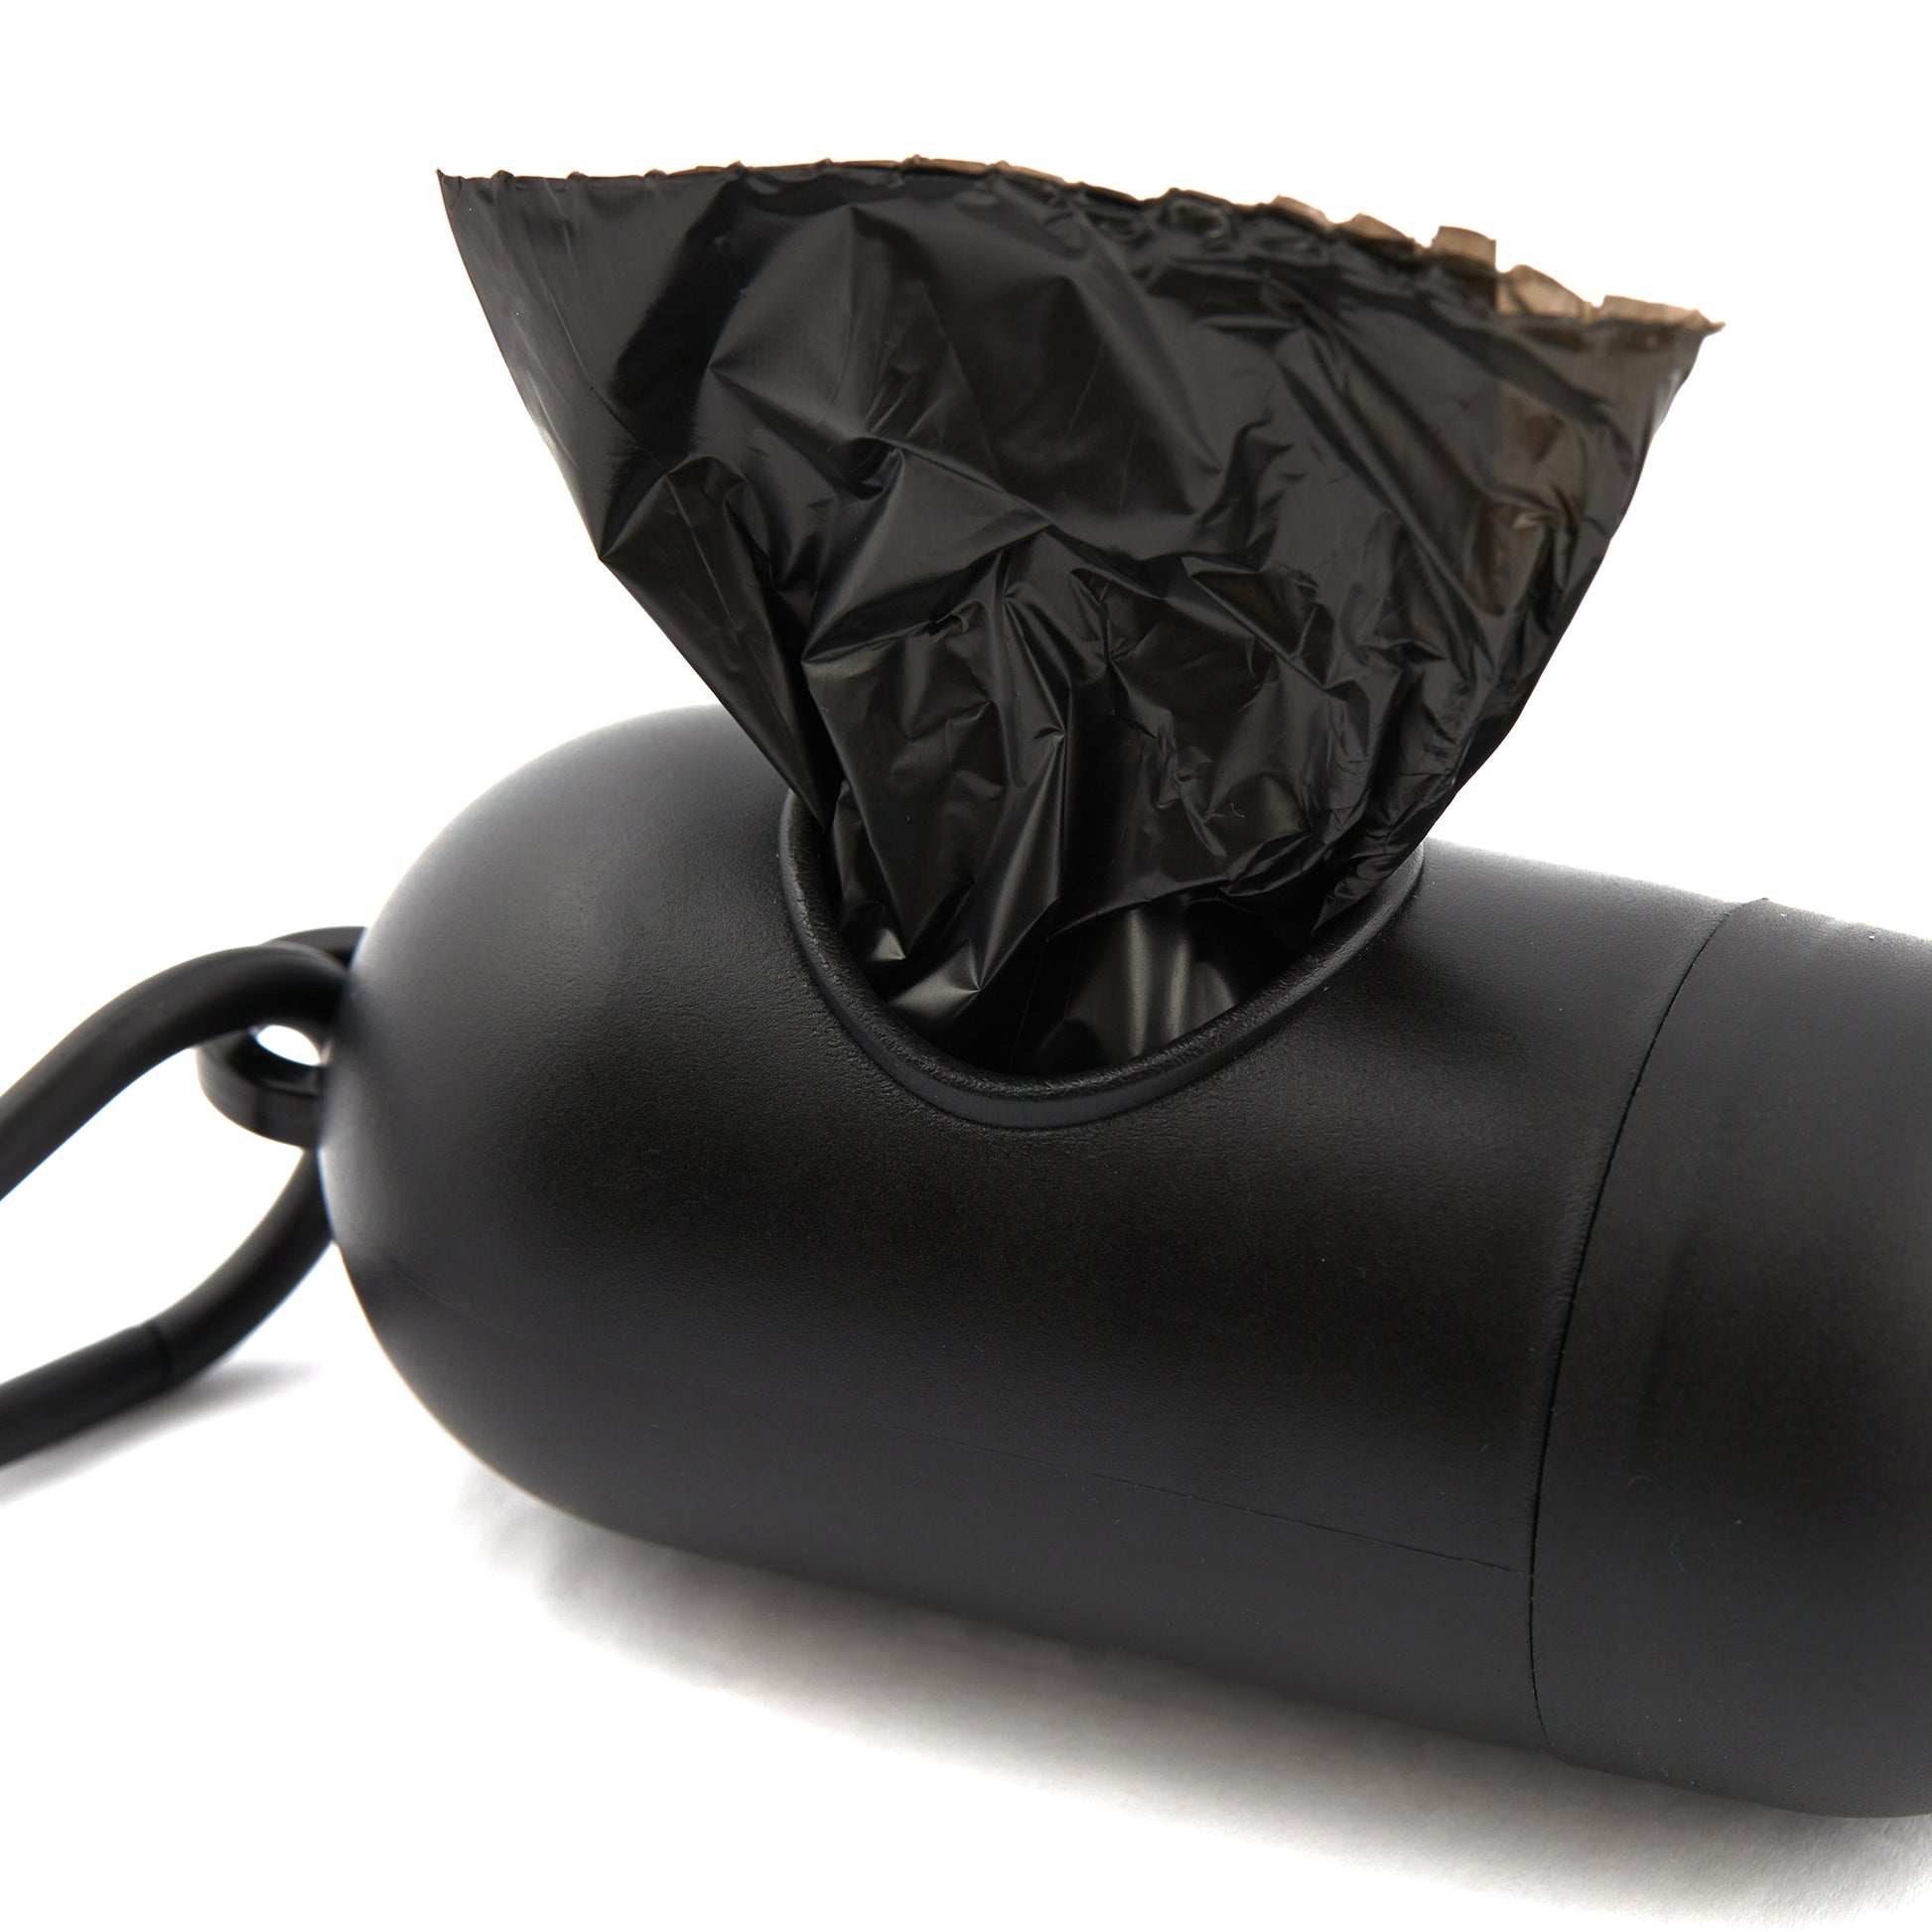 essentials dog poop bags with waste bag dispenser, 300 count, 20 pack of 15, black10